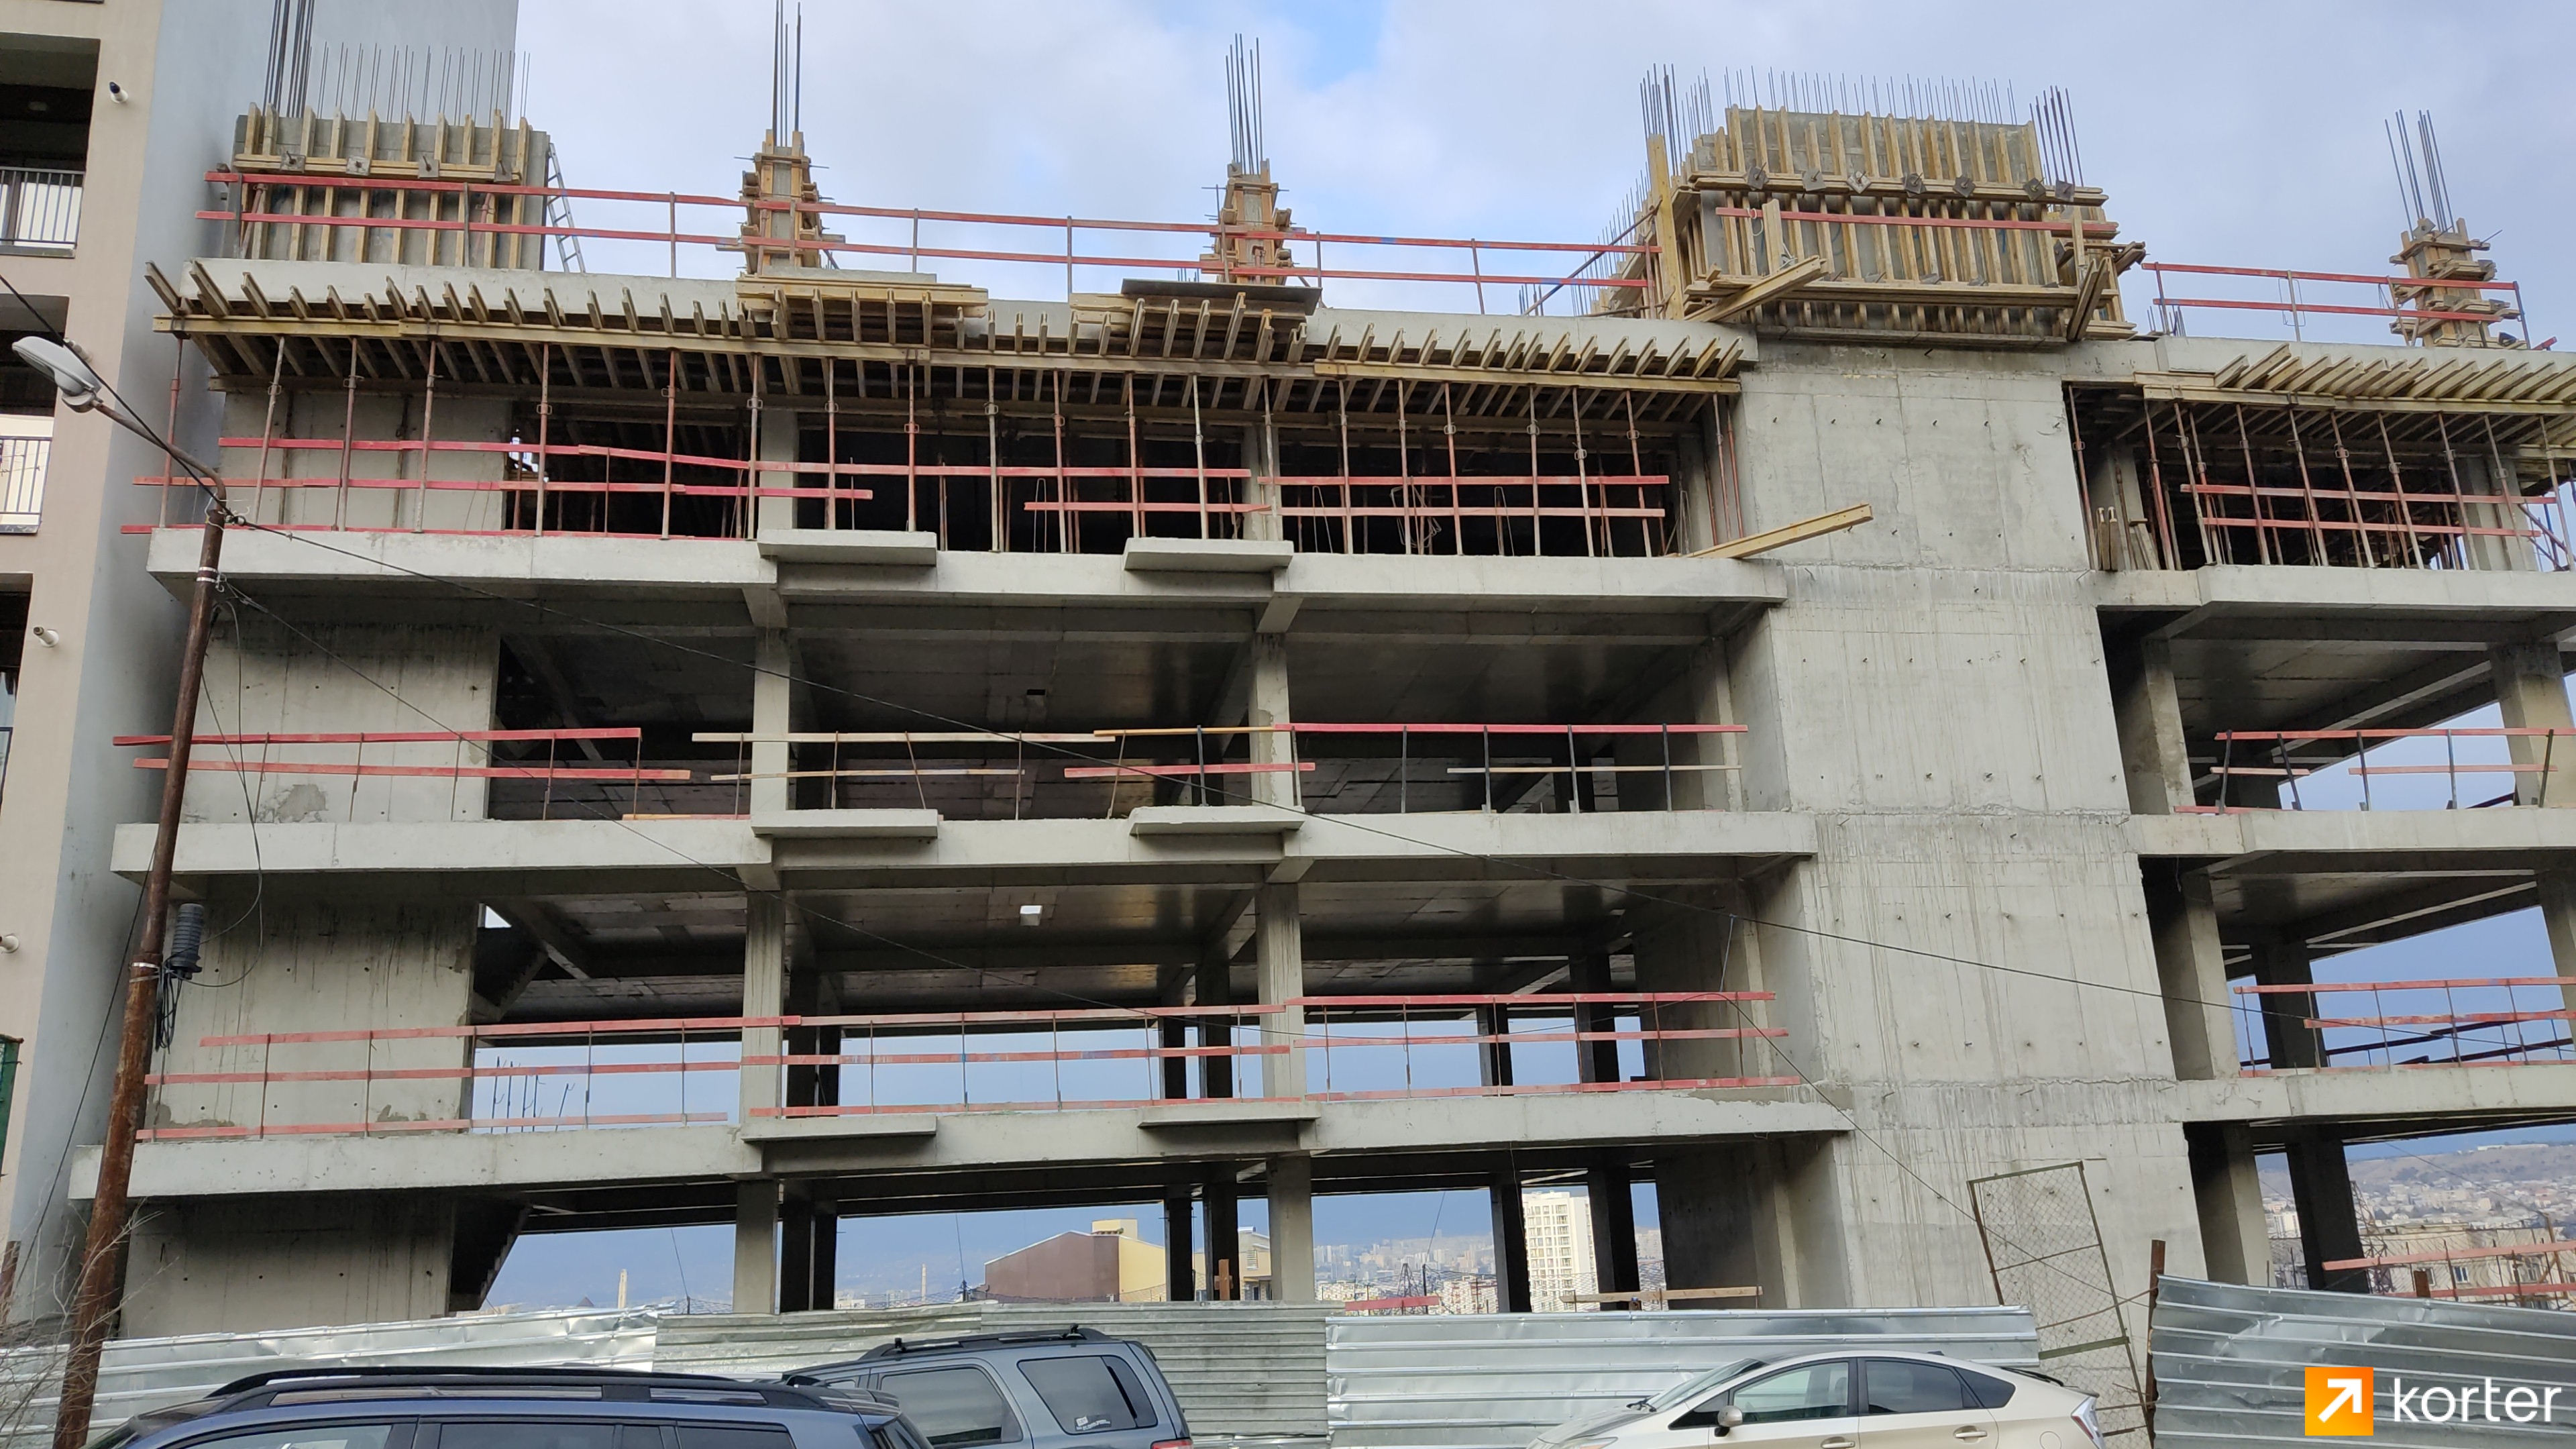 Construction progress House on Tofuria 1 - Angle 3, February 2022